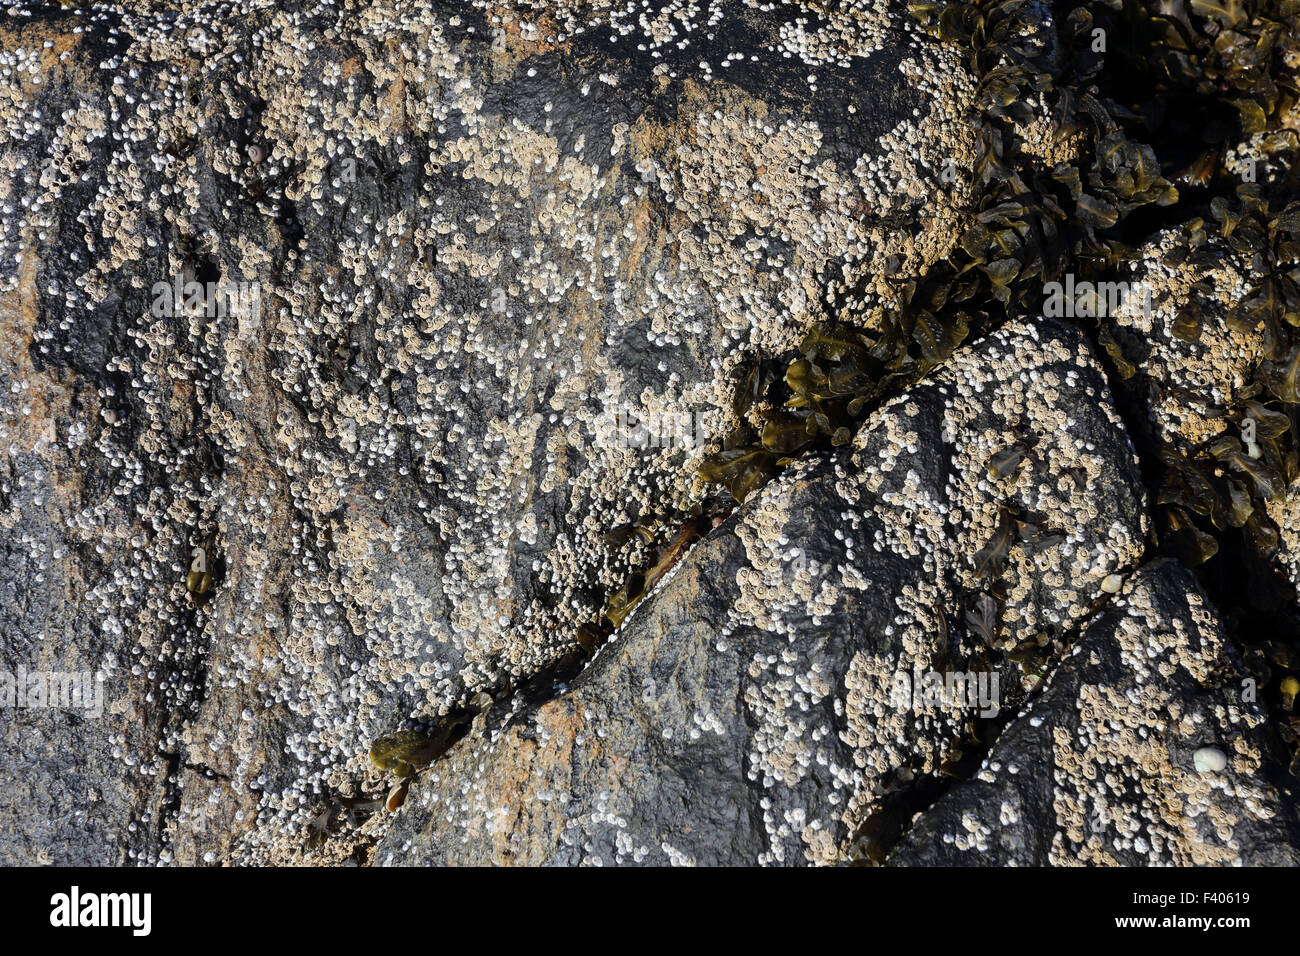 Rock cirripedi, Balanus balanoides, Seepocken Foto Stock